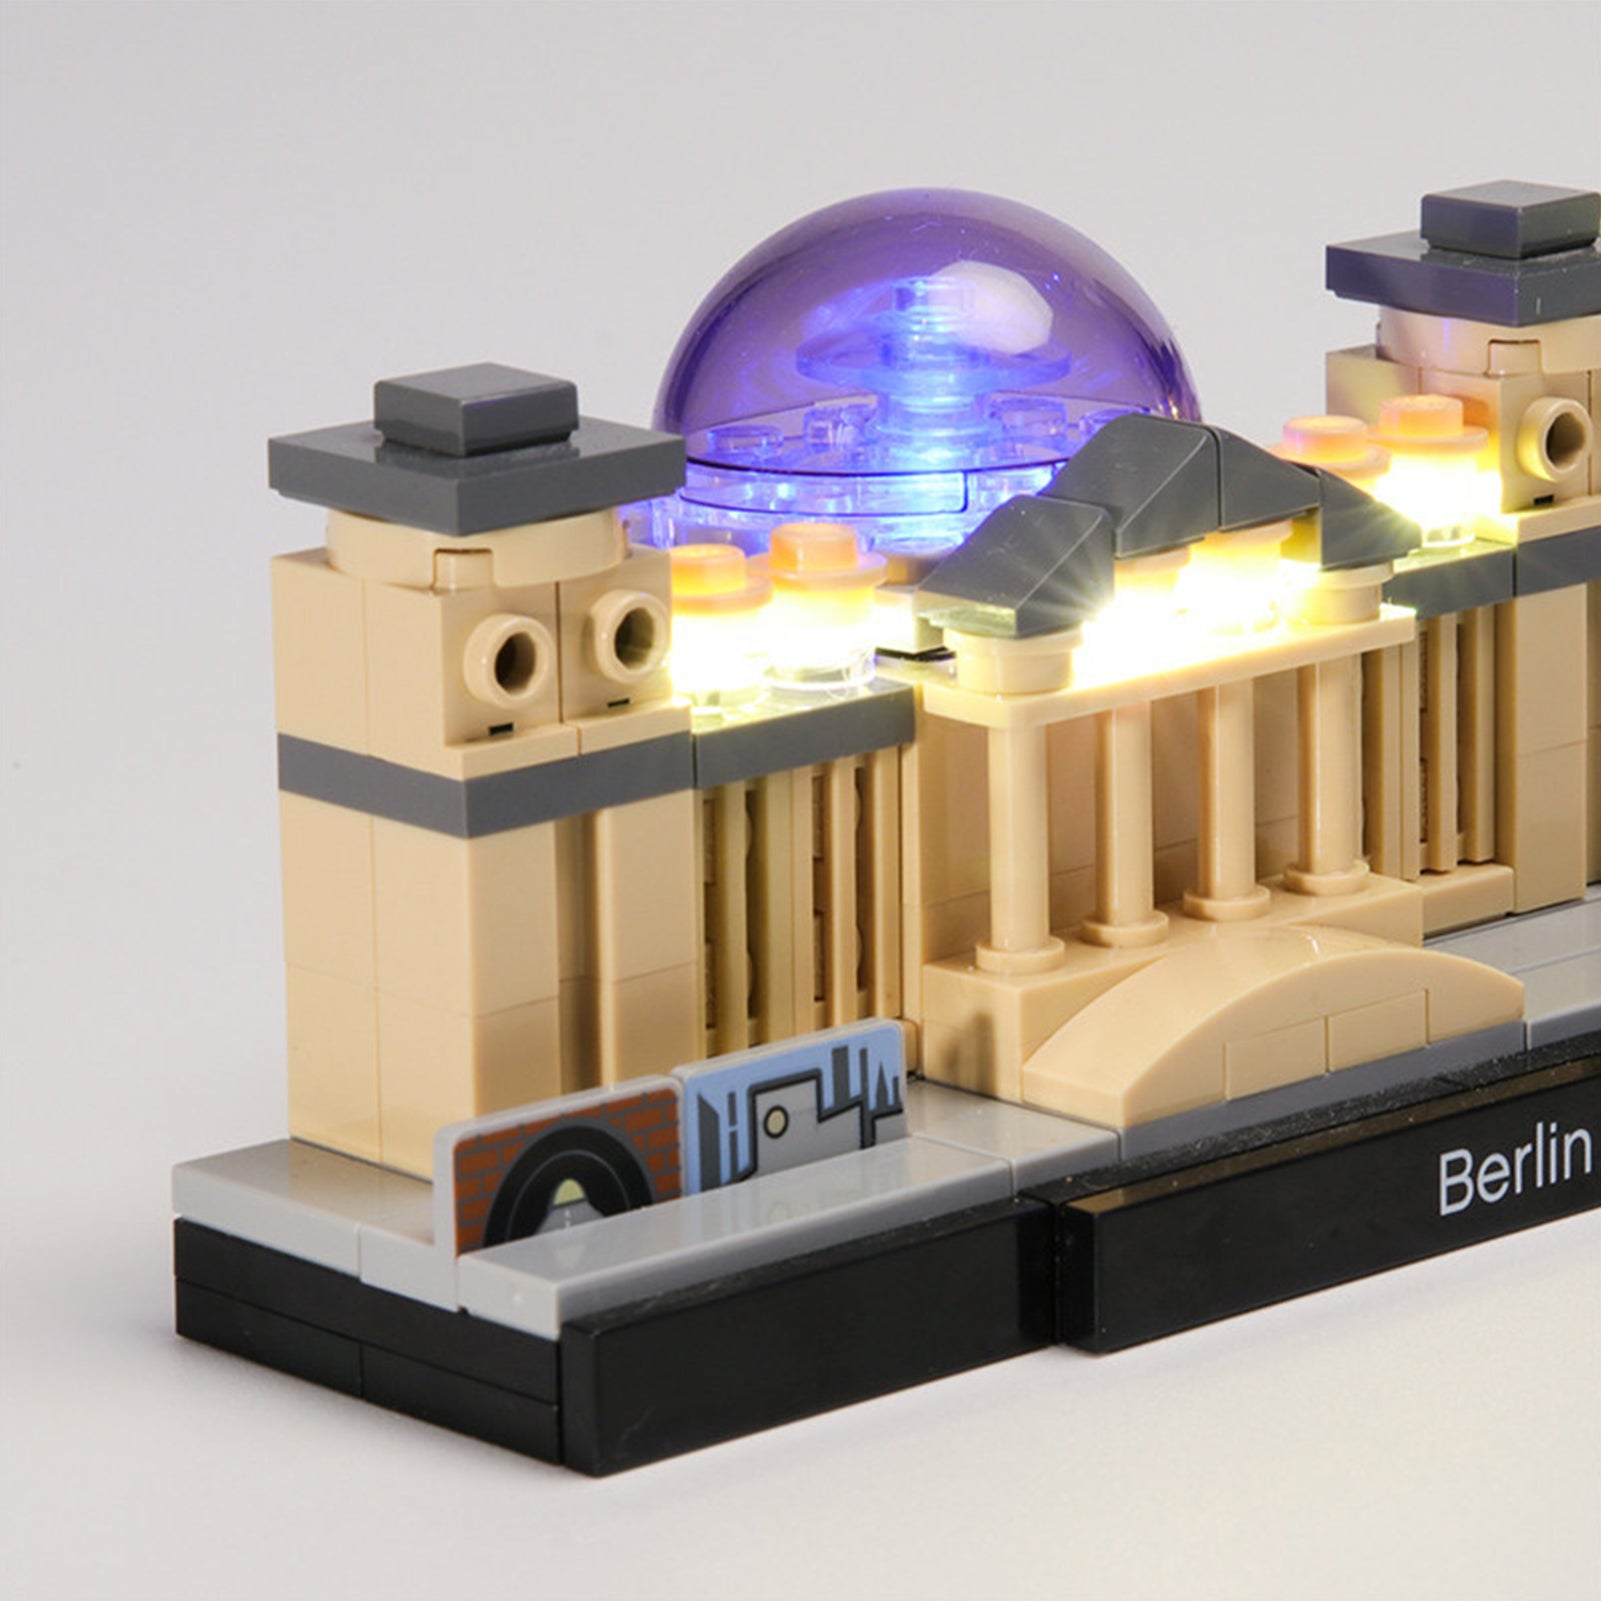 Light kit for Lego City 21027  Architecture Berlin